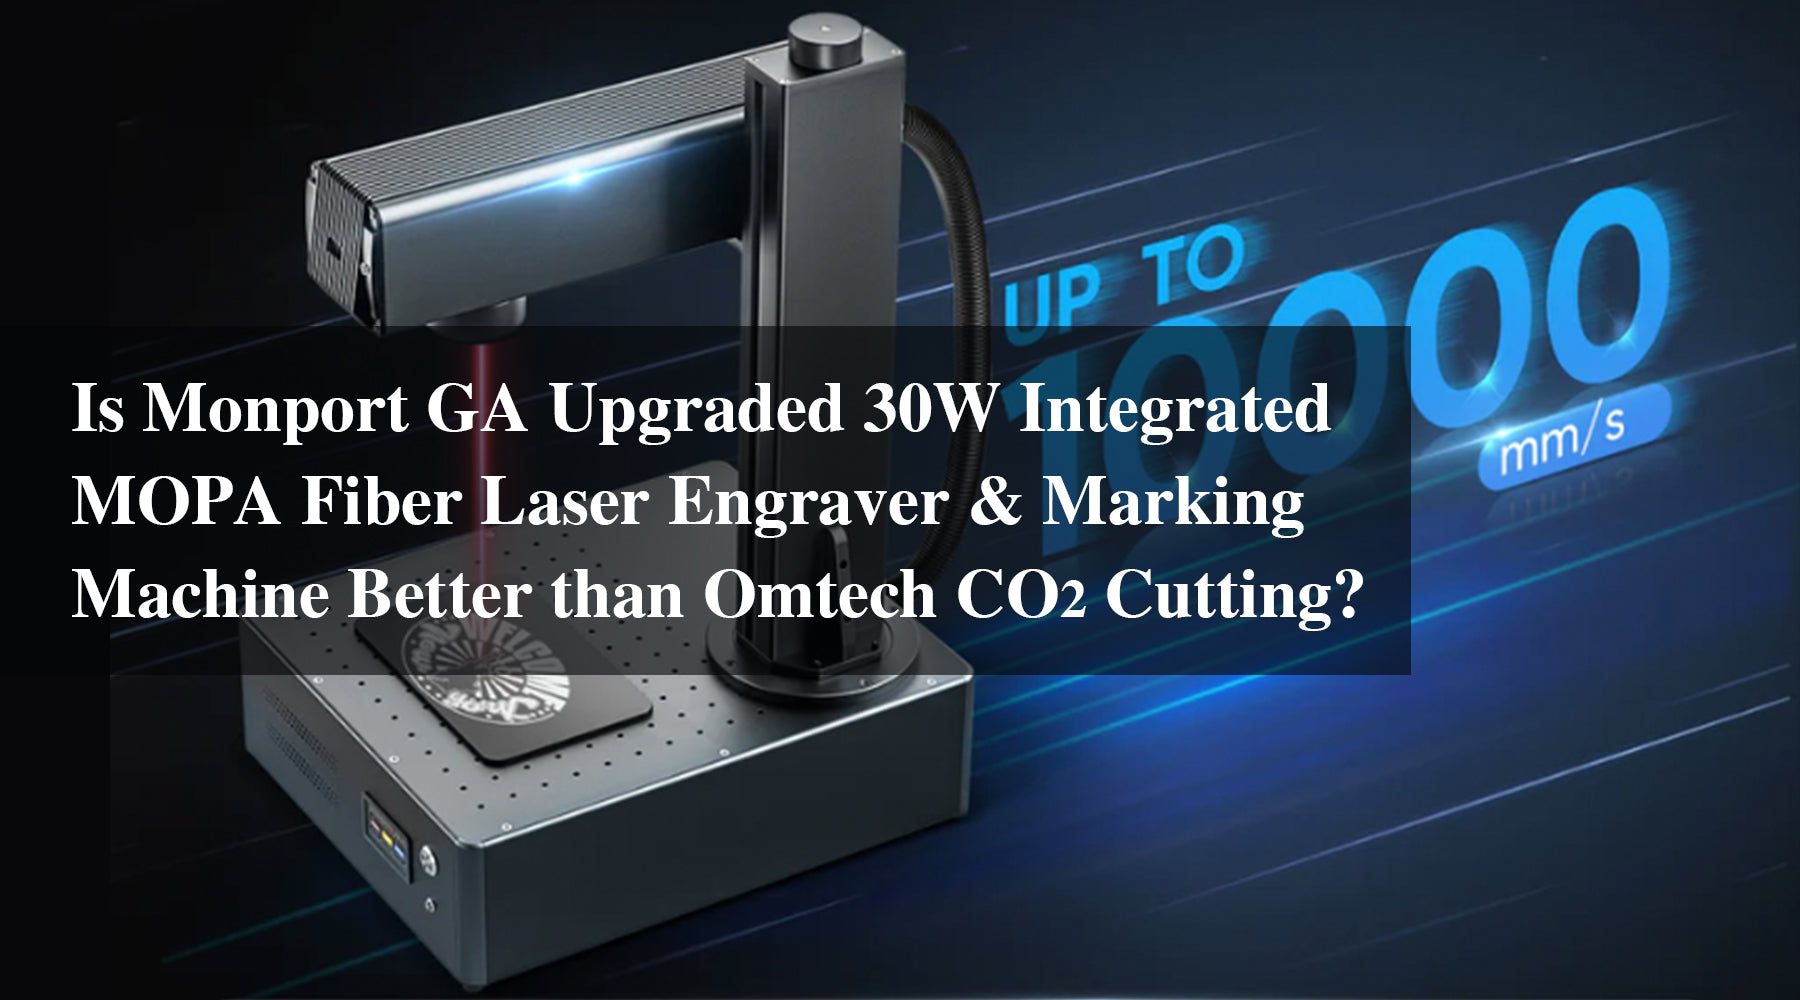 Is Monport GA Upgraded 30W Integrated MOPA Fiber Laser Engraver & Marking Machine Better than Omtech CO2 Cutting?